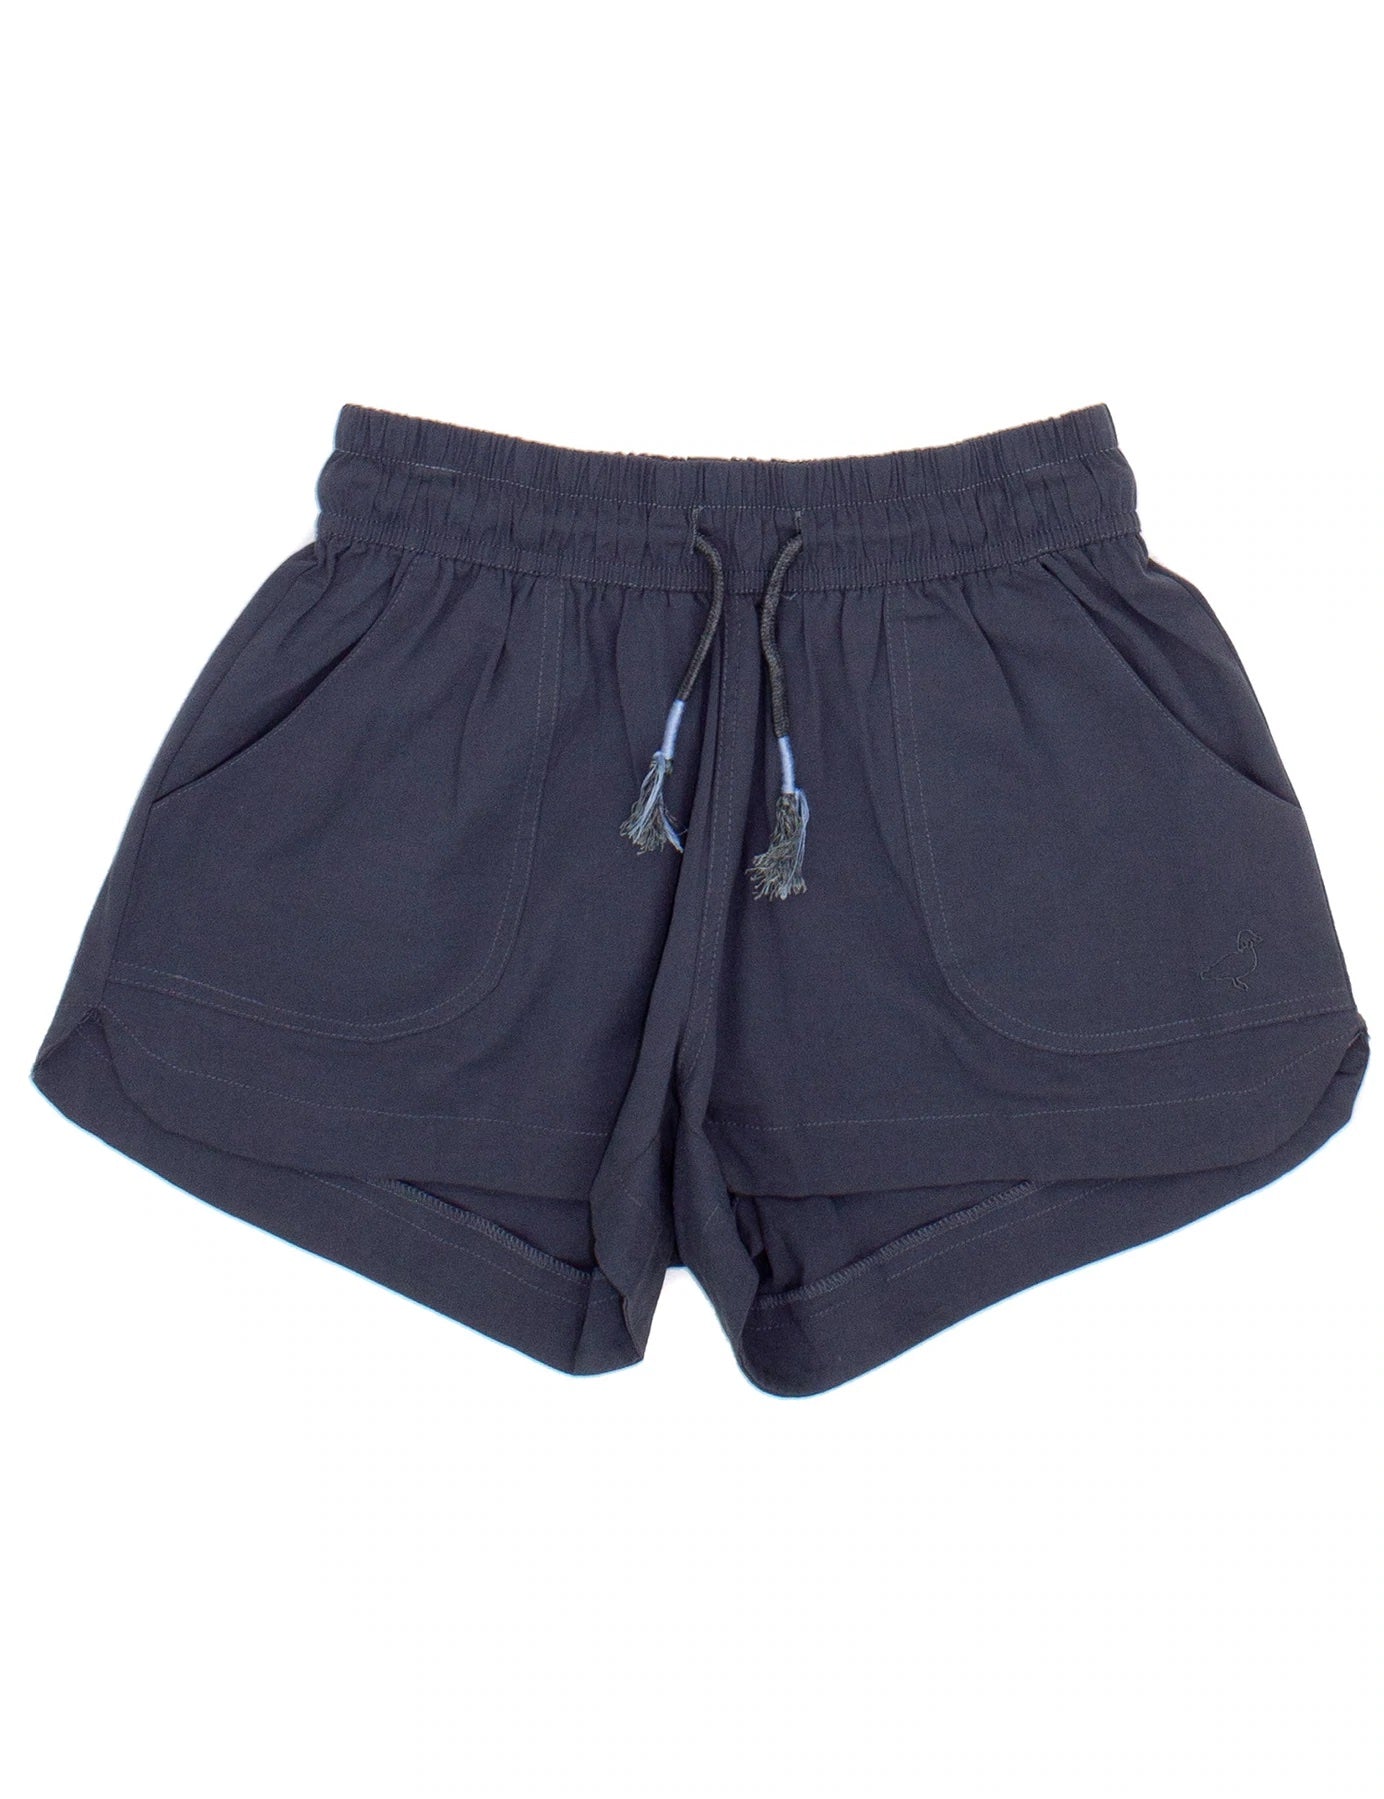 Properly Tied Coast Shorts - Charcoal